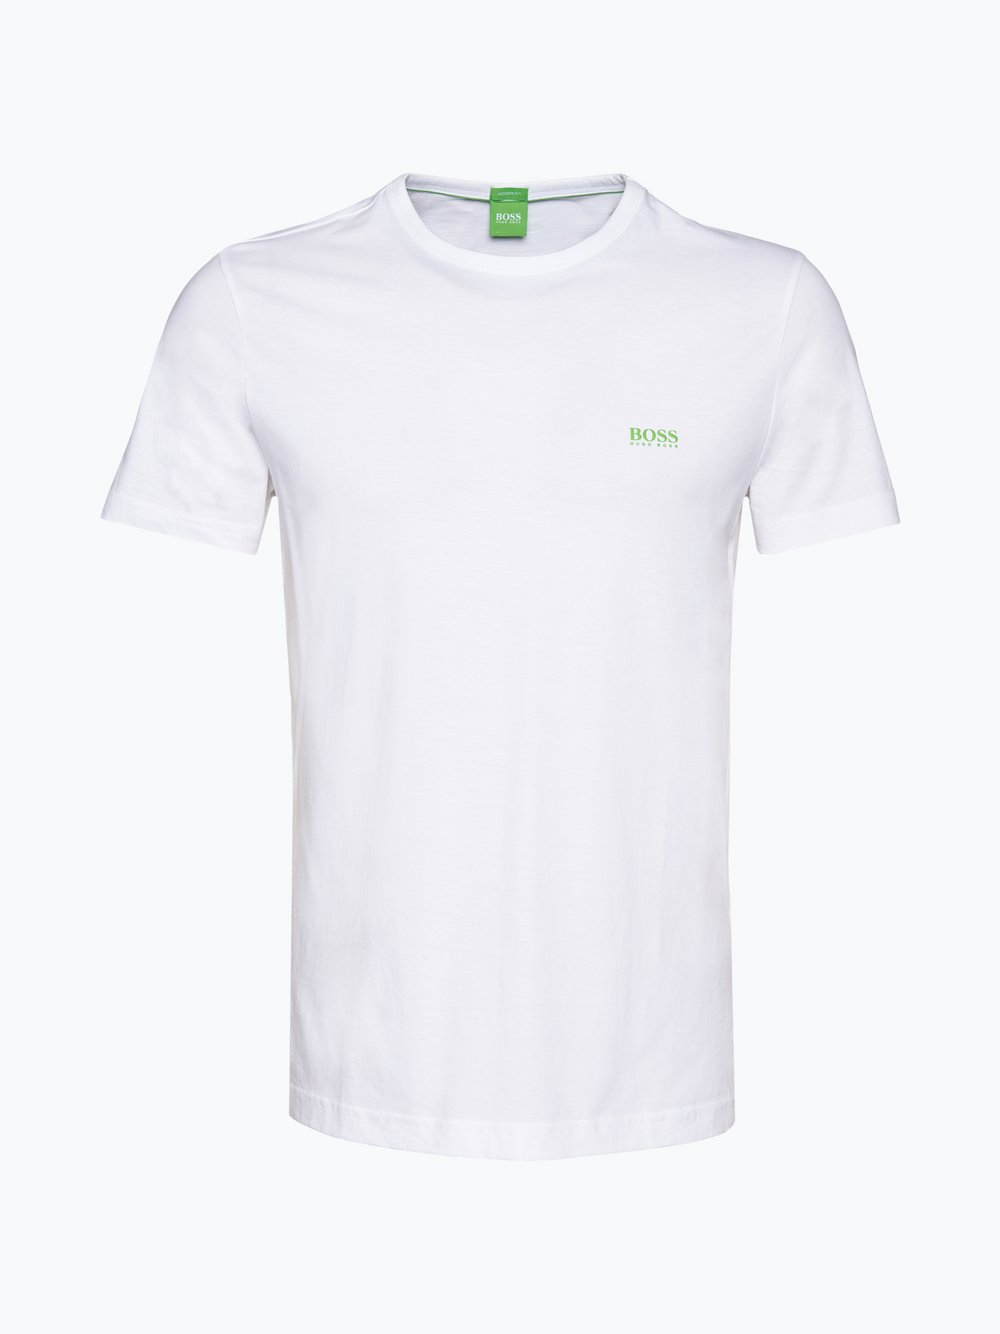 BOSS Athleisure - T-shirt męski – Tee, biały